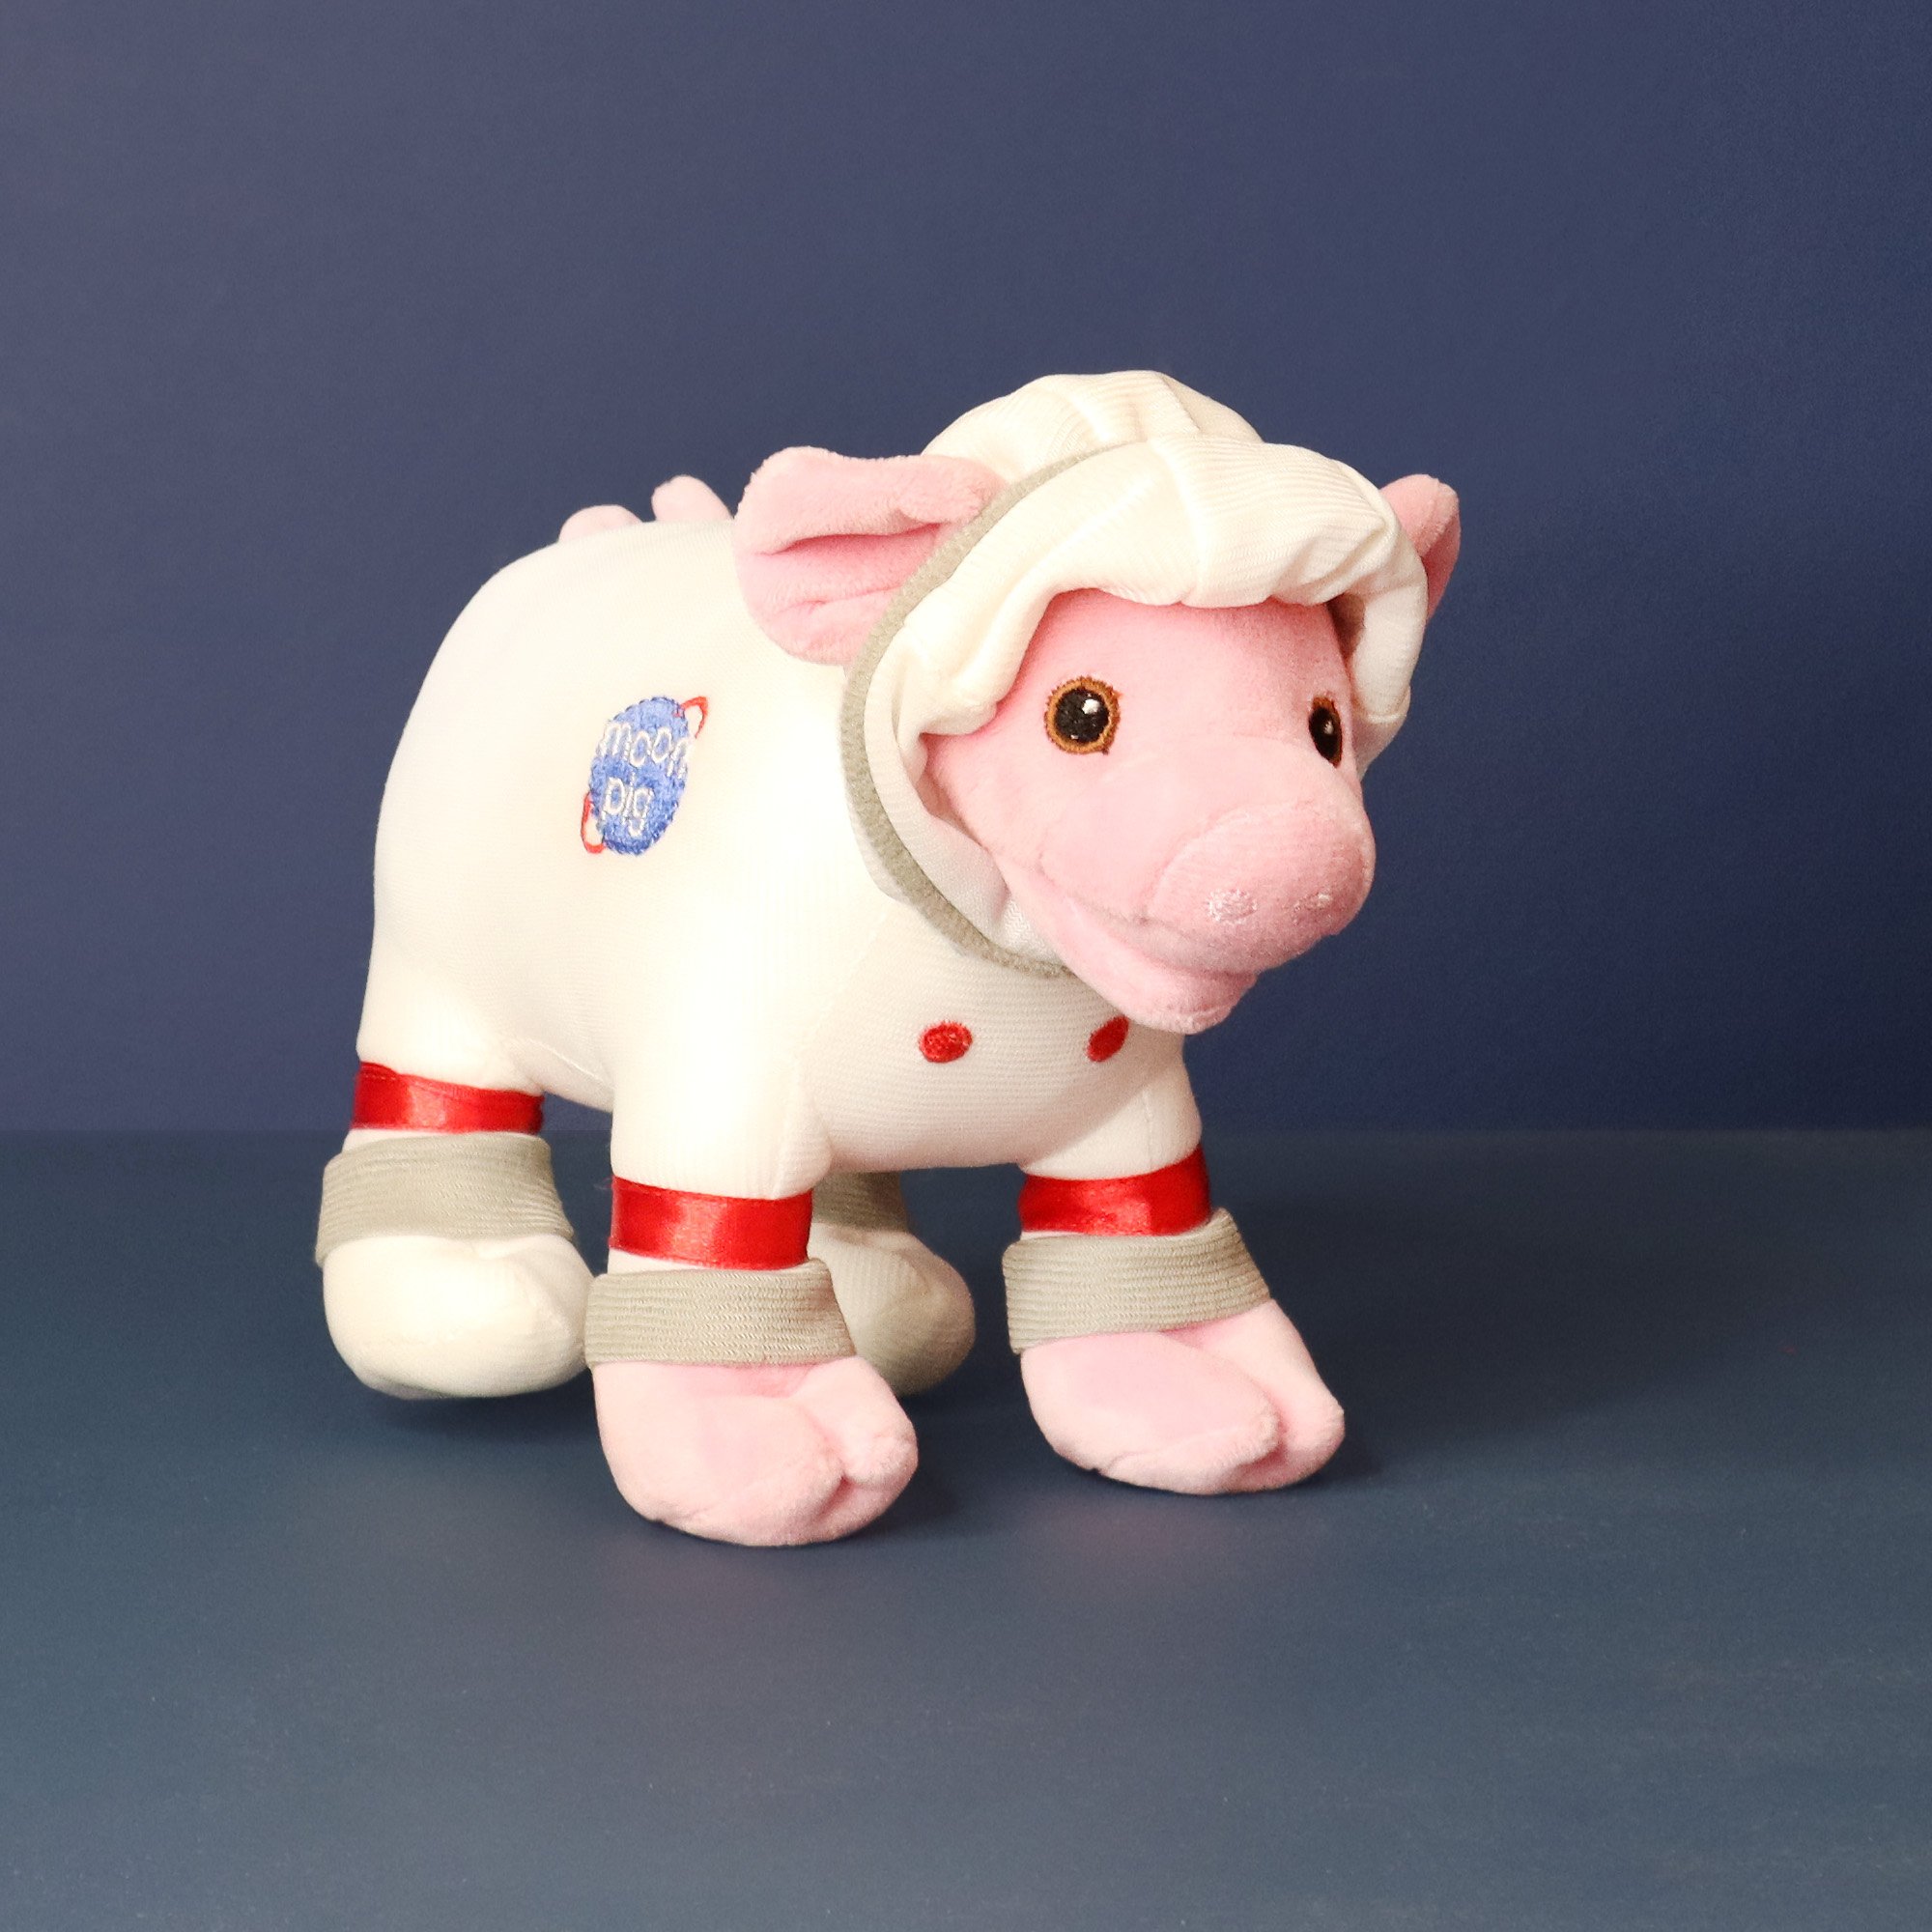 Space Moonpig Plush Soft Toy